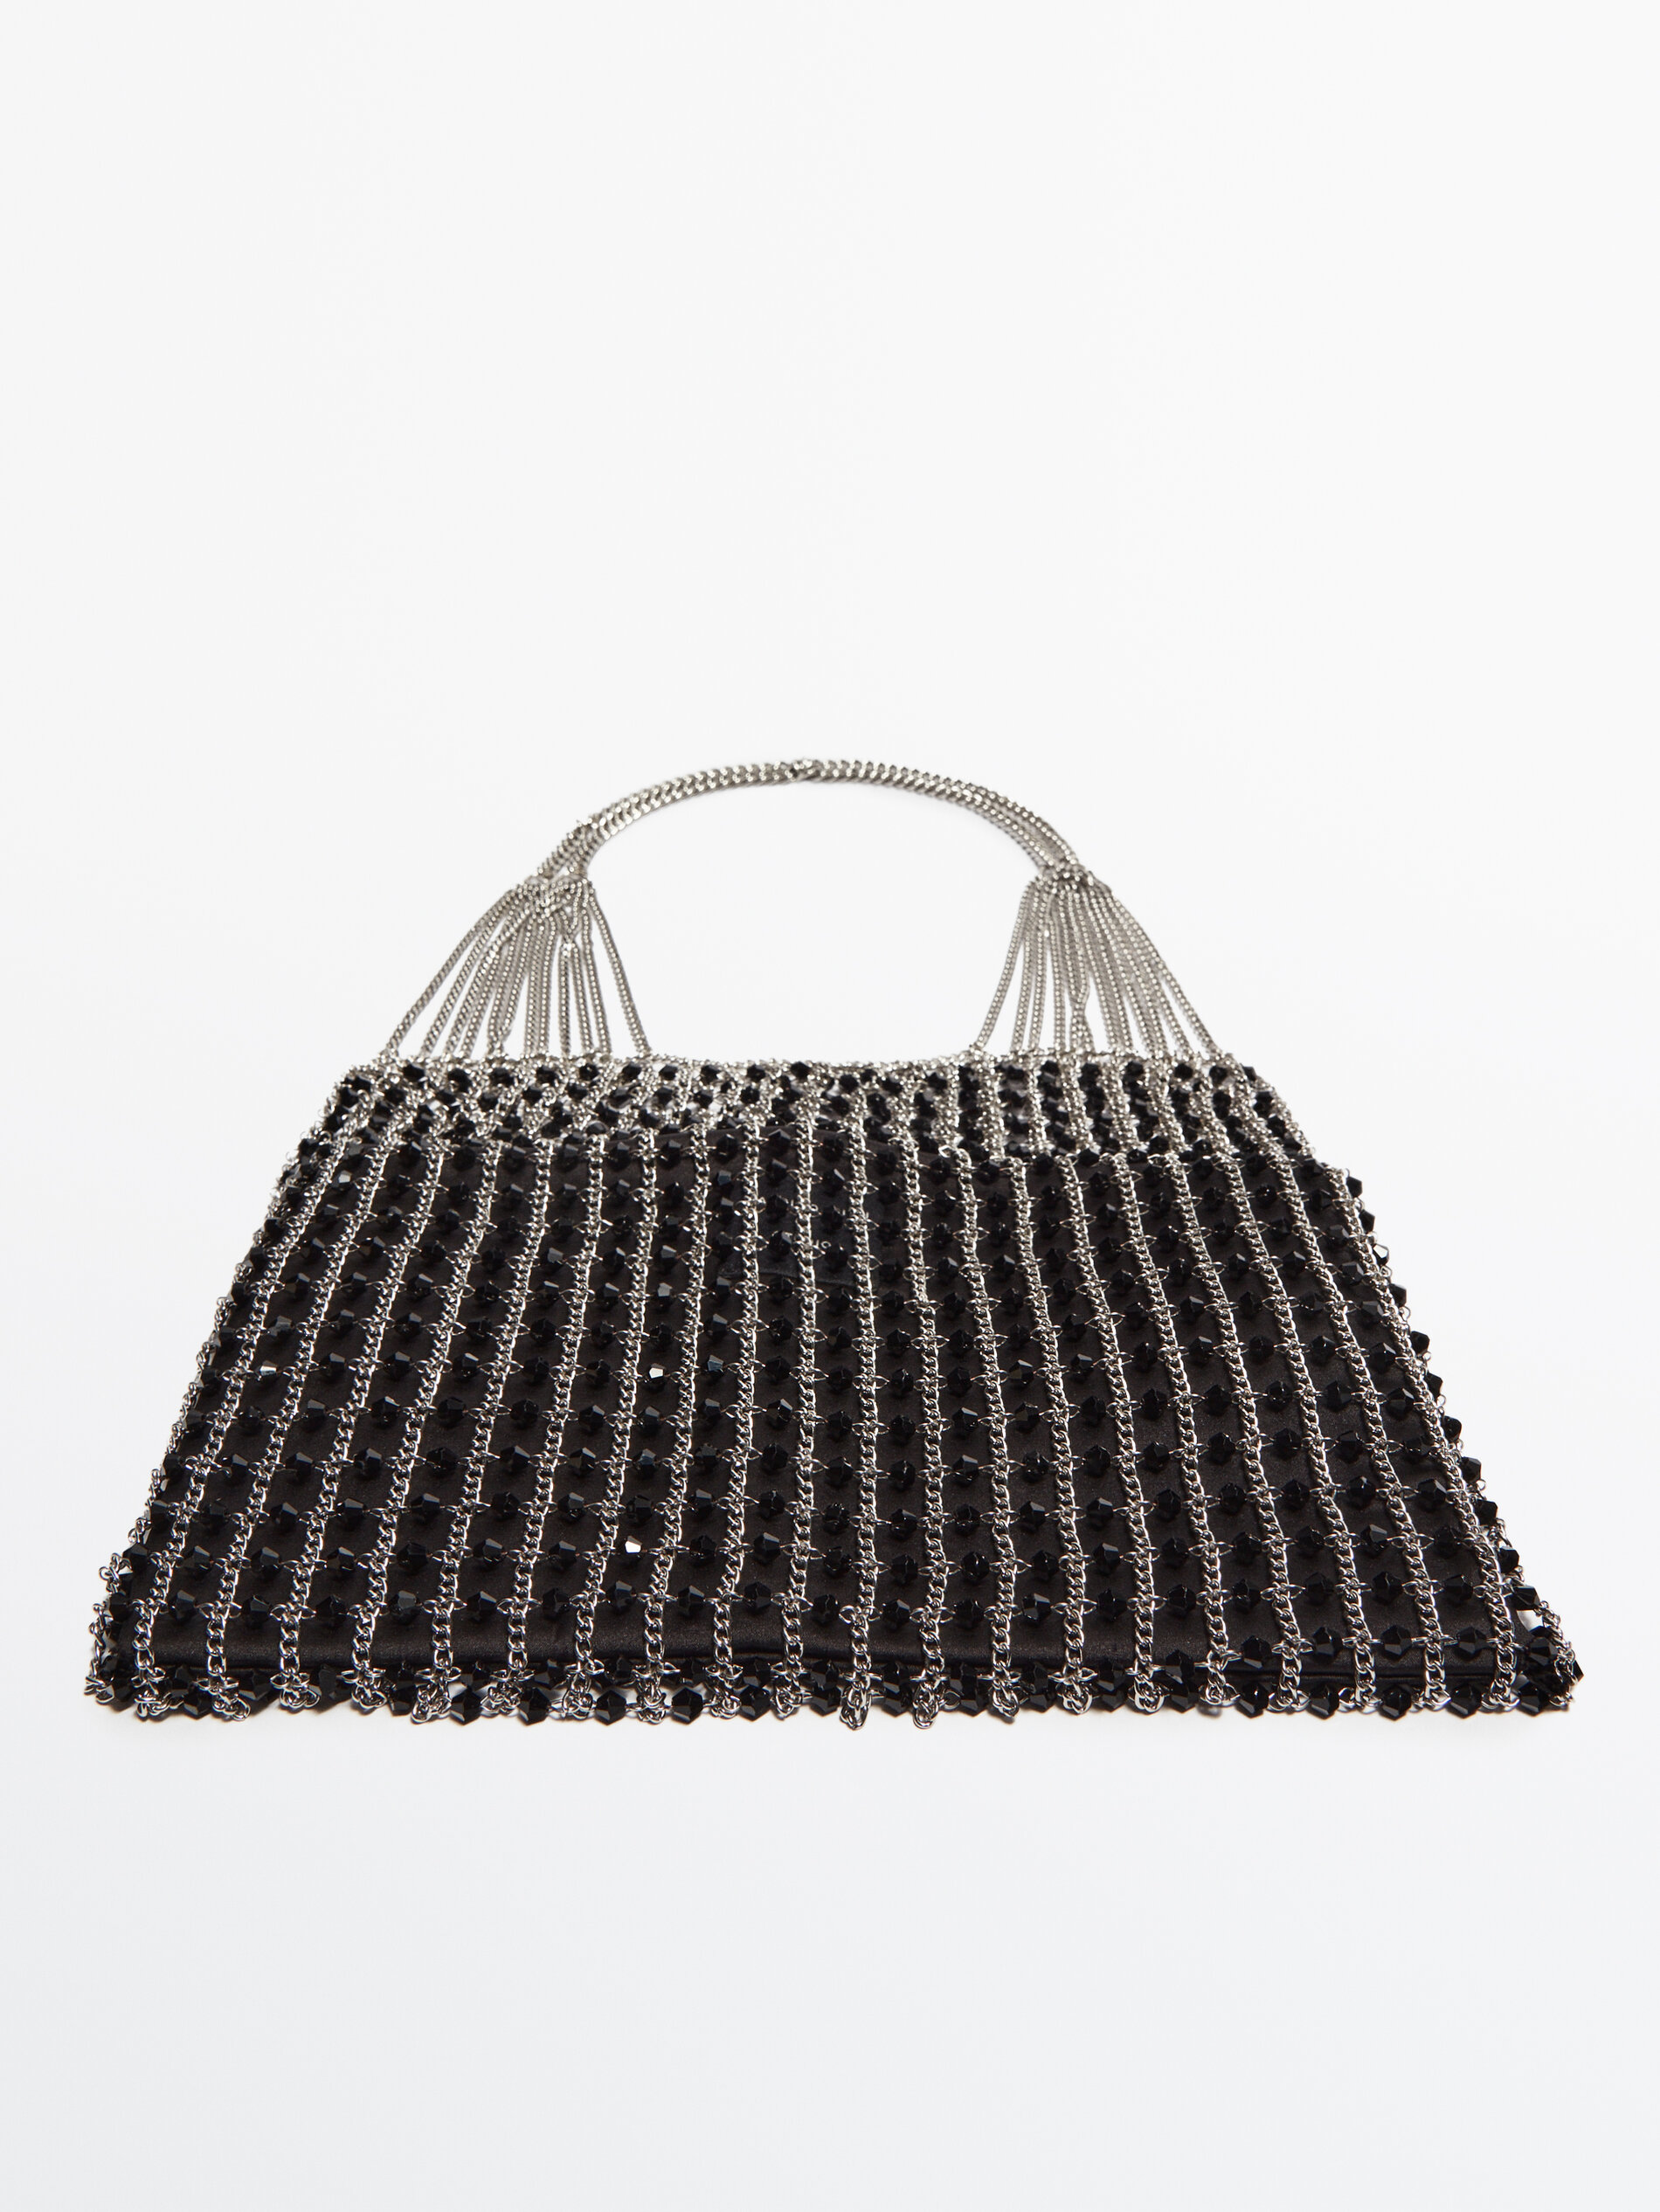 Beaded bag with chain strap - Studio - Massimo Dutti United Kingdom